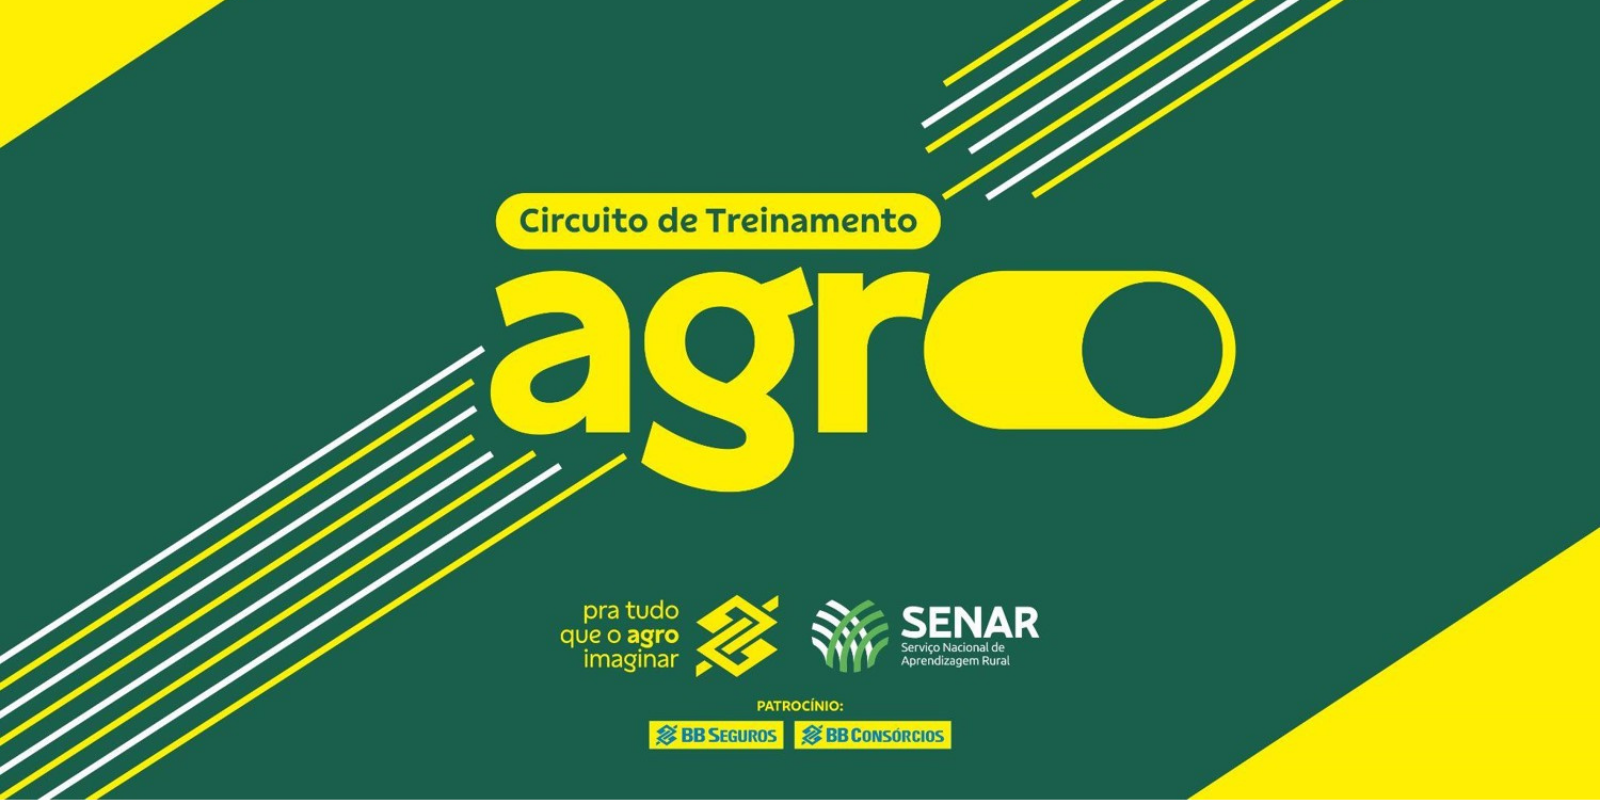 SENAR/AP e Banco do Brasil realizam “Circuito de Treinamento Agro” para produtores de comunidades rurais do Amapá